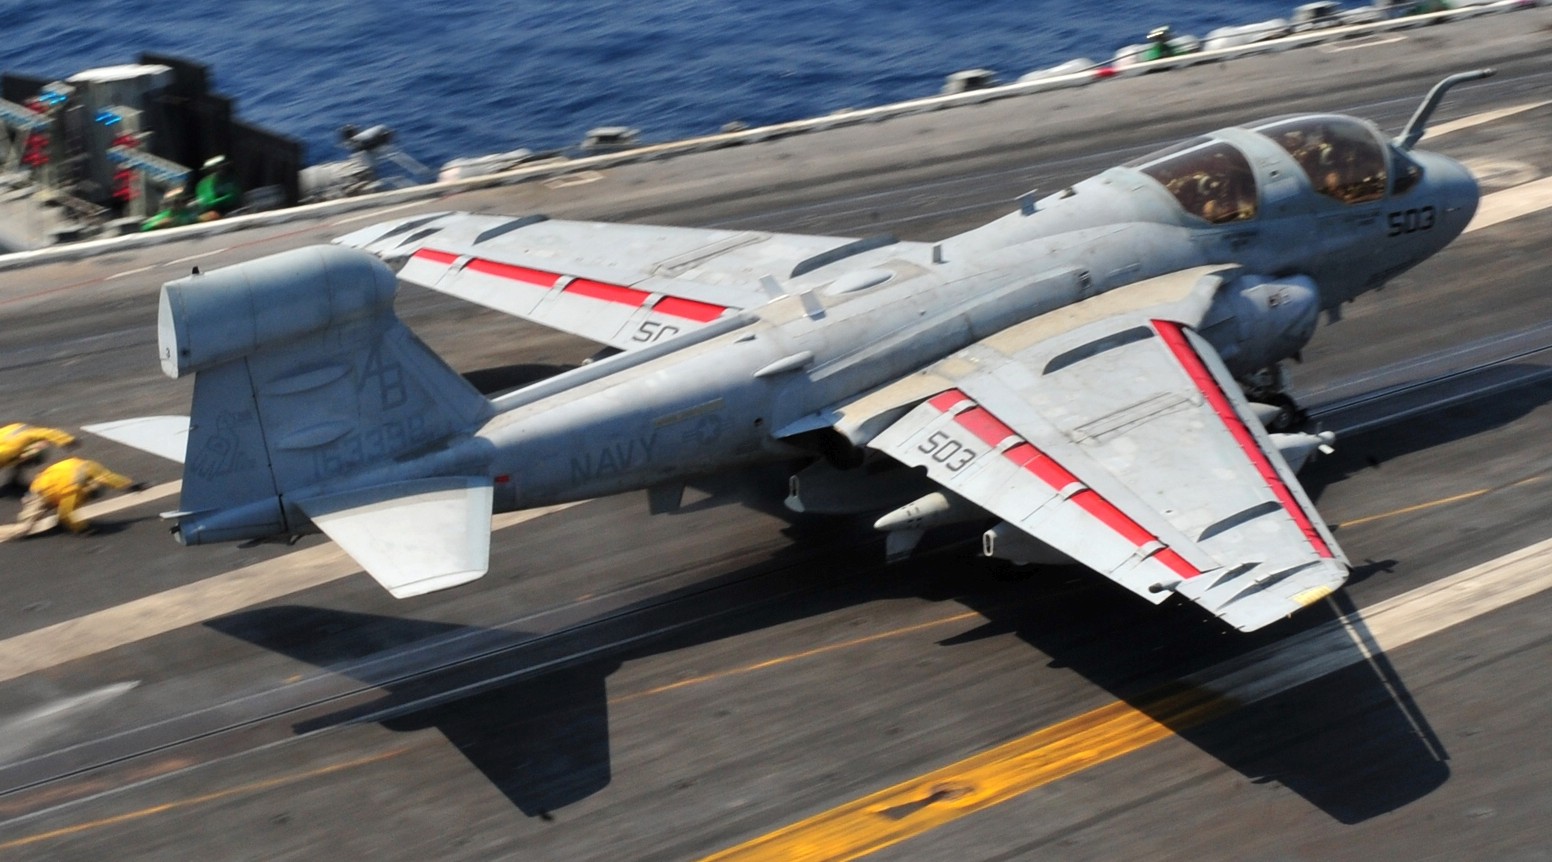 vaq-137 rooks electronic attack squadron us navy ea-6b prowler carrier air wing cvw-1 uss enterprise cvn-65 21